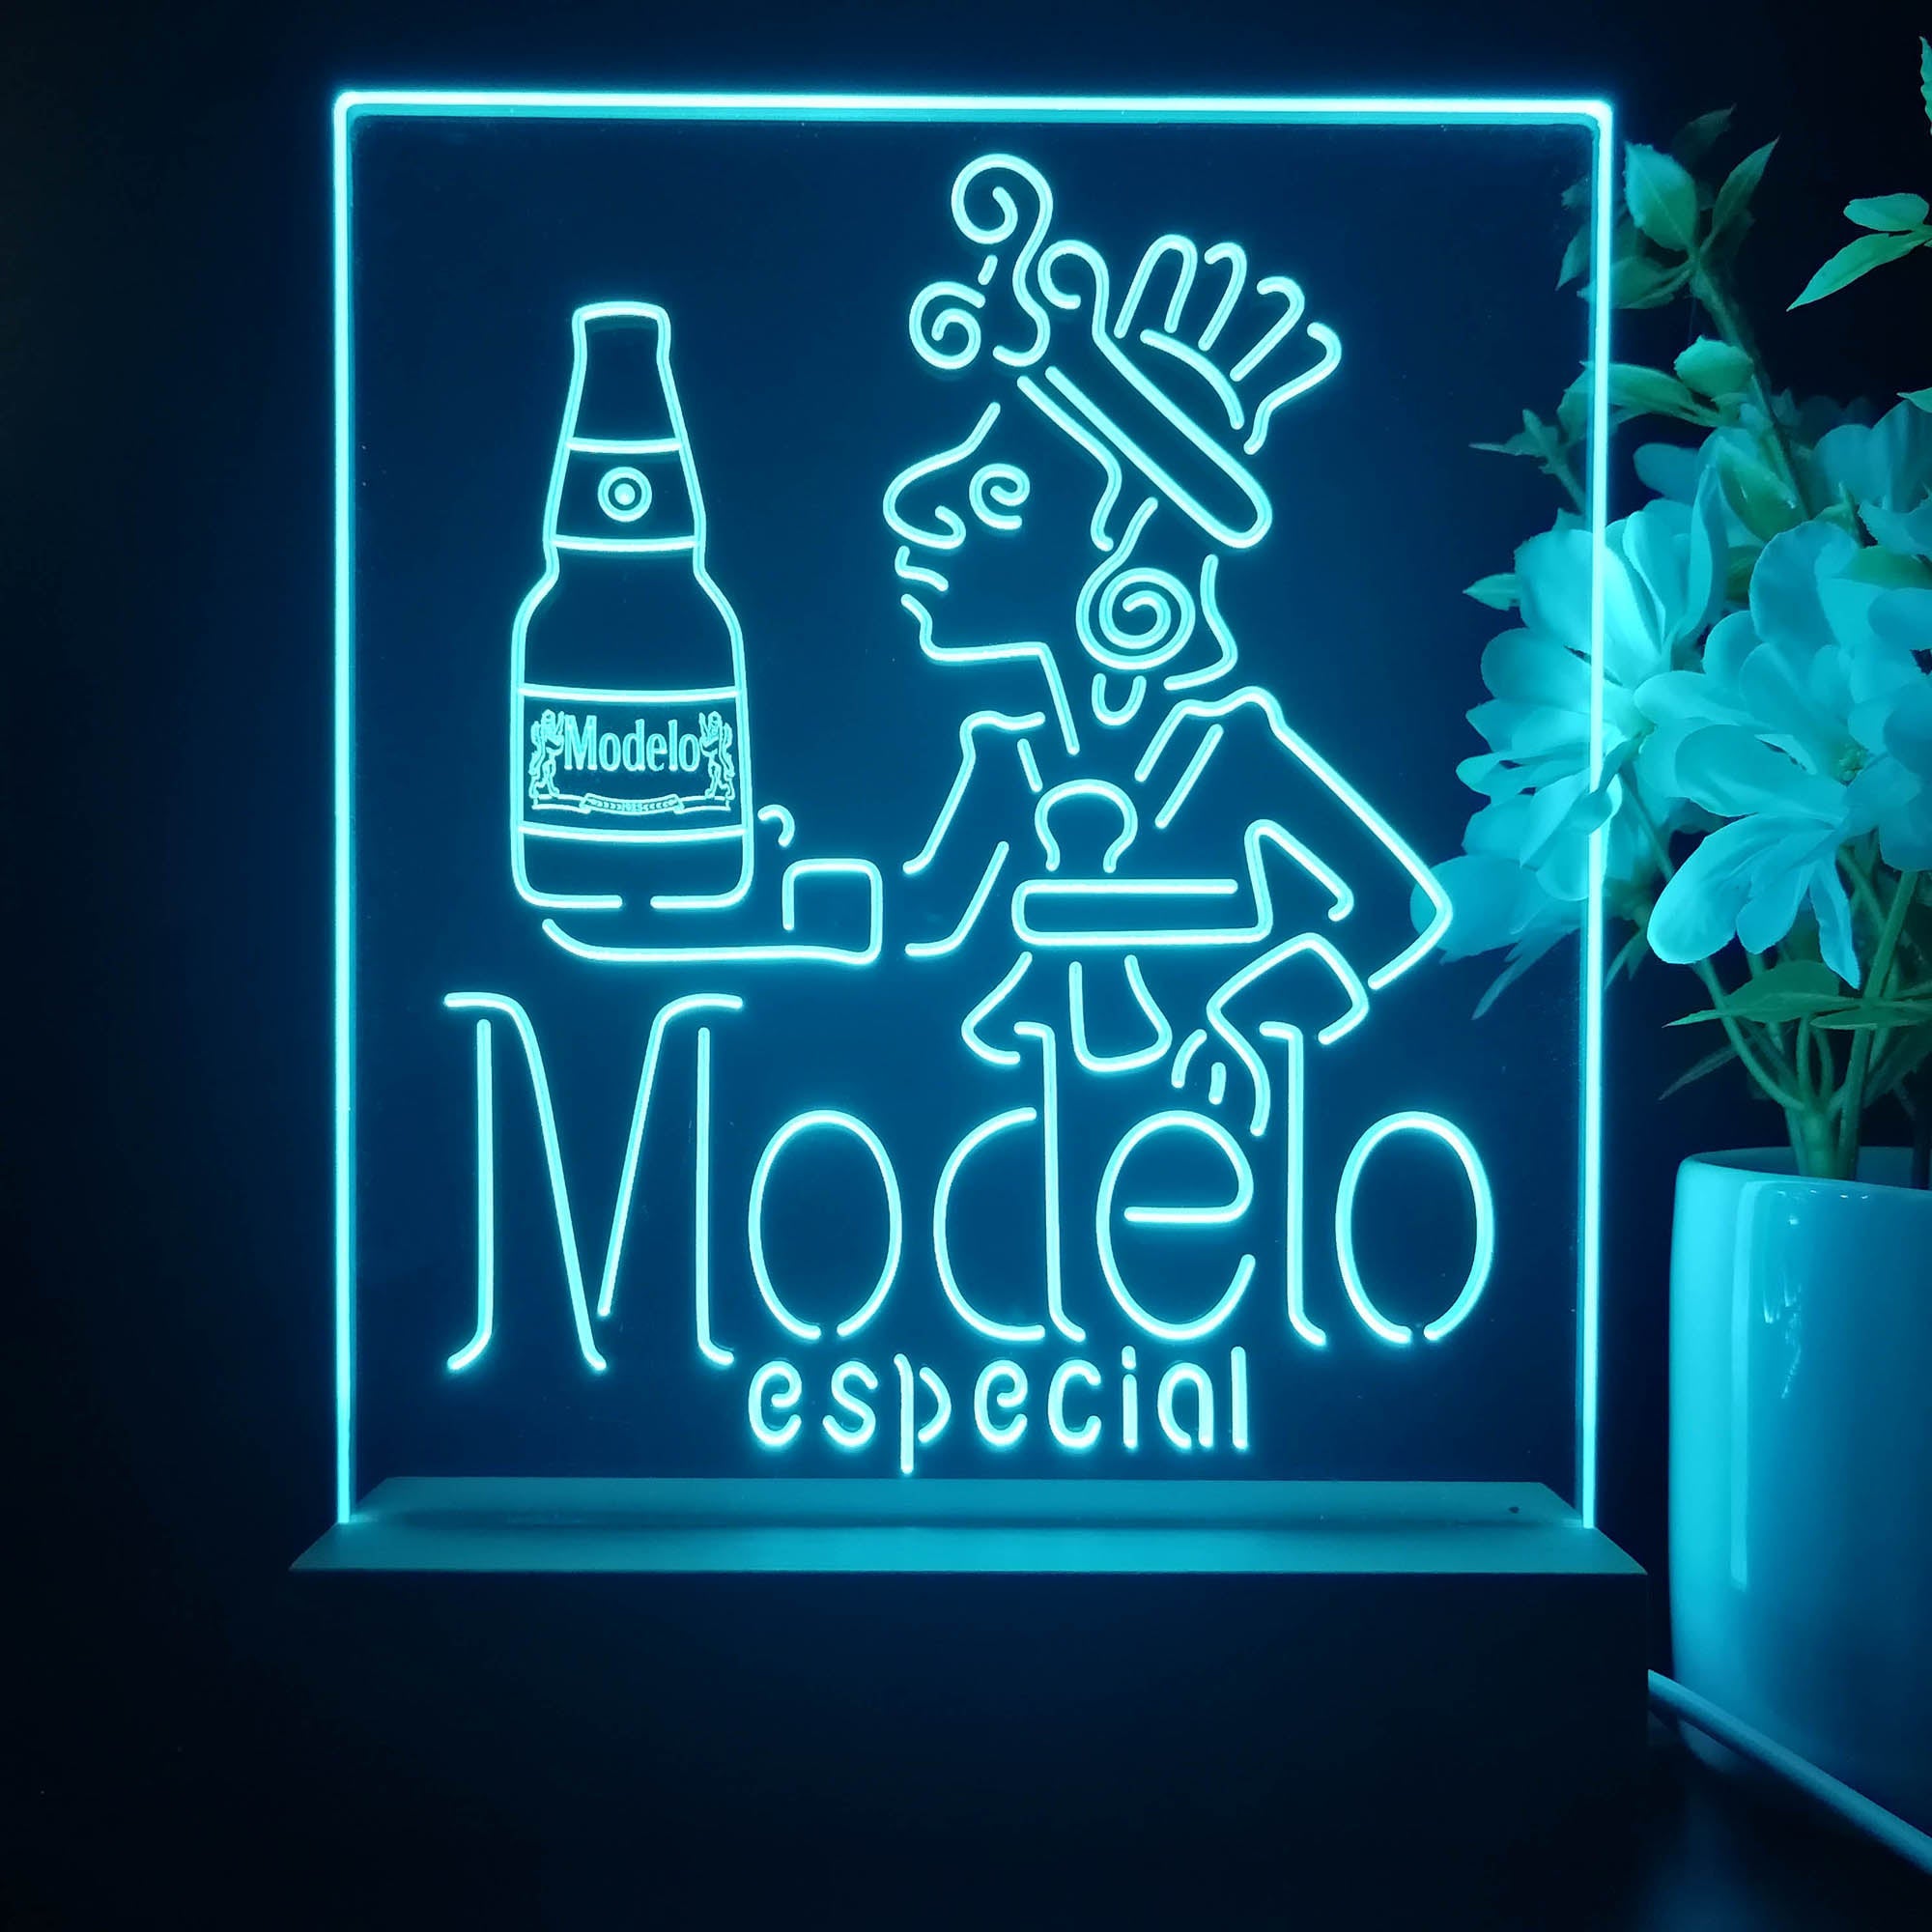 Modelo Especial Night Light Neon Pub Bar Lamp